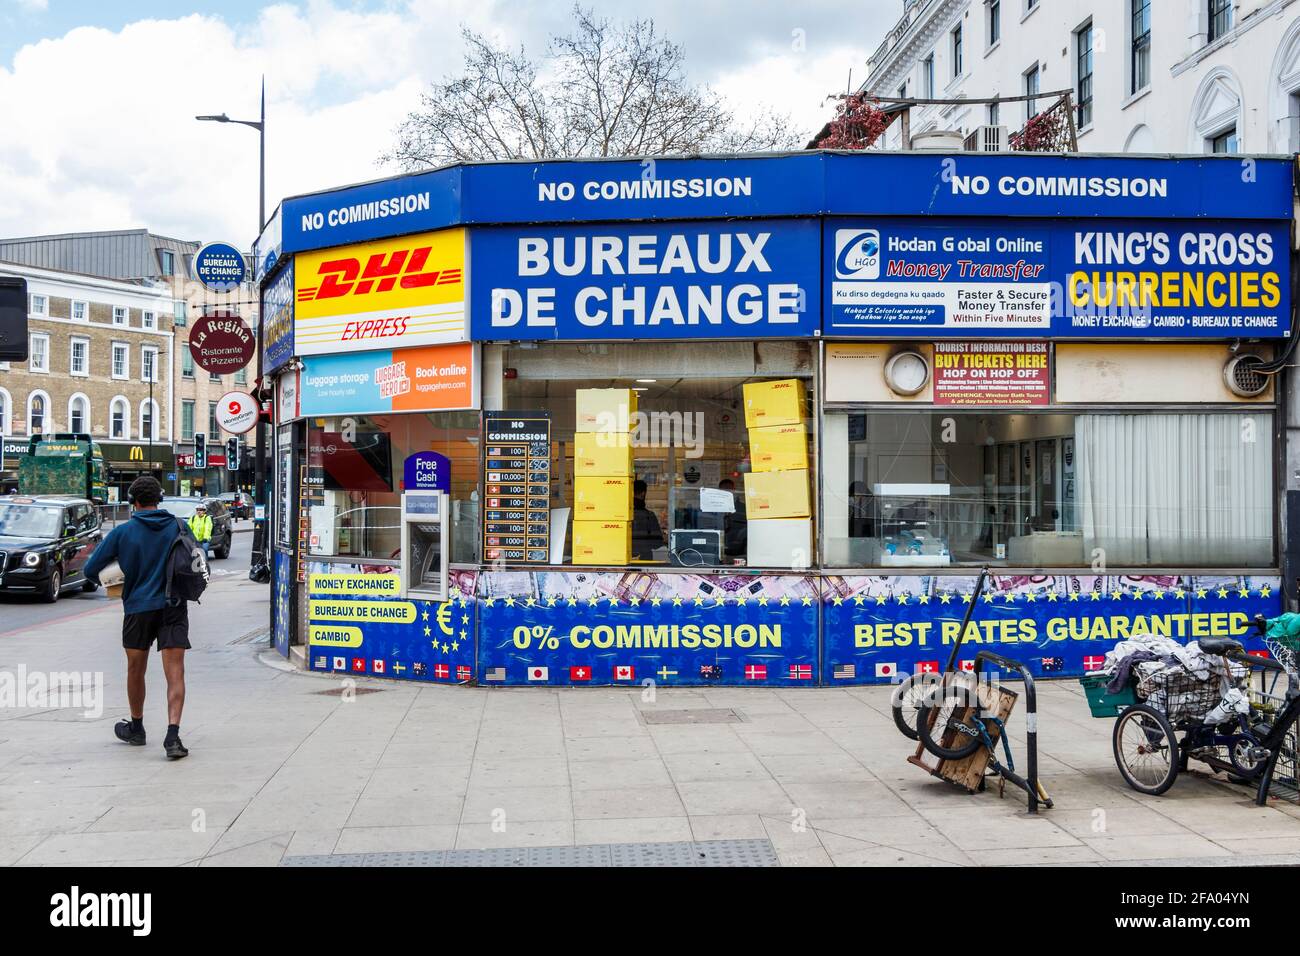 A bureau de change on Euston Road at King's Cross, London, UK Stock Photo